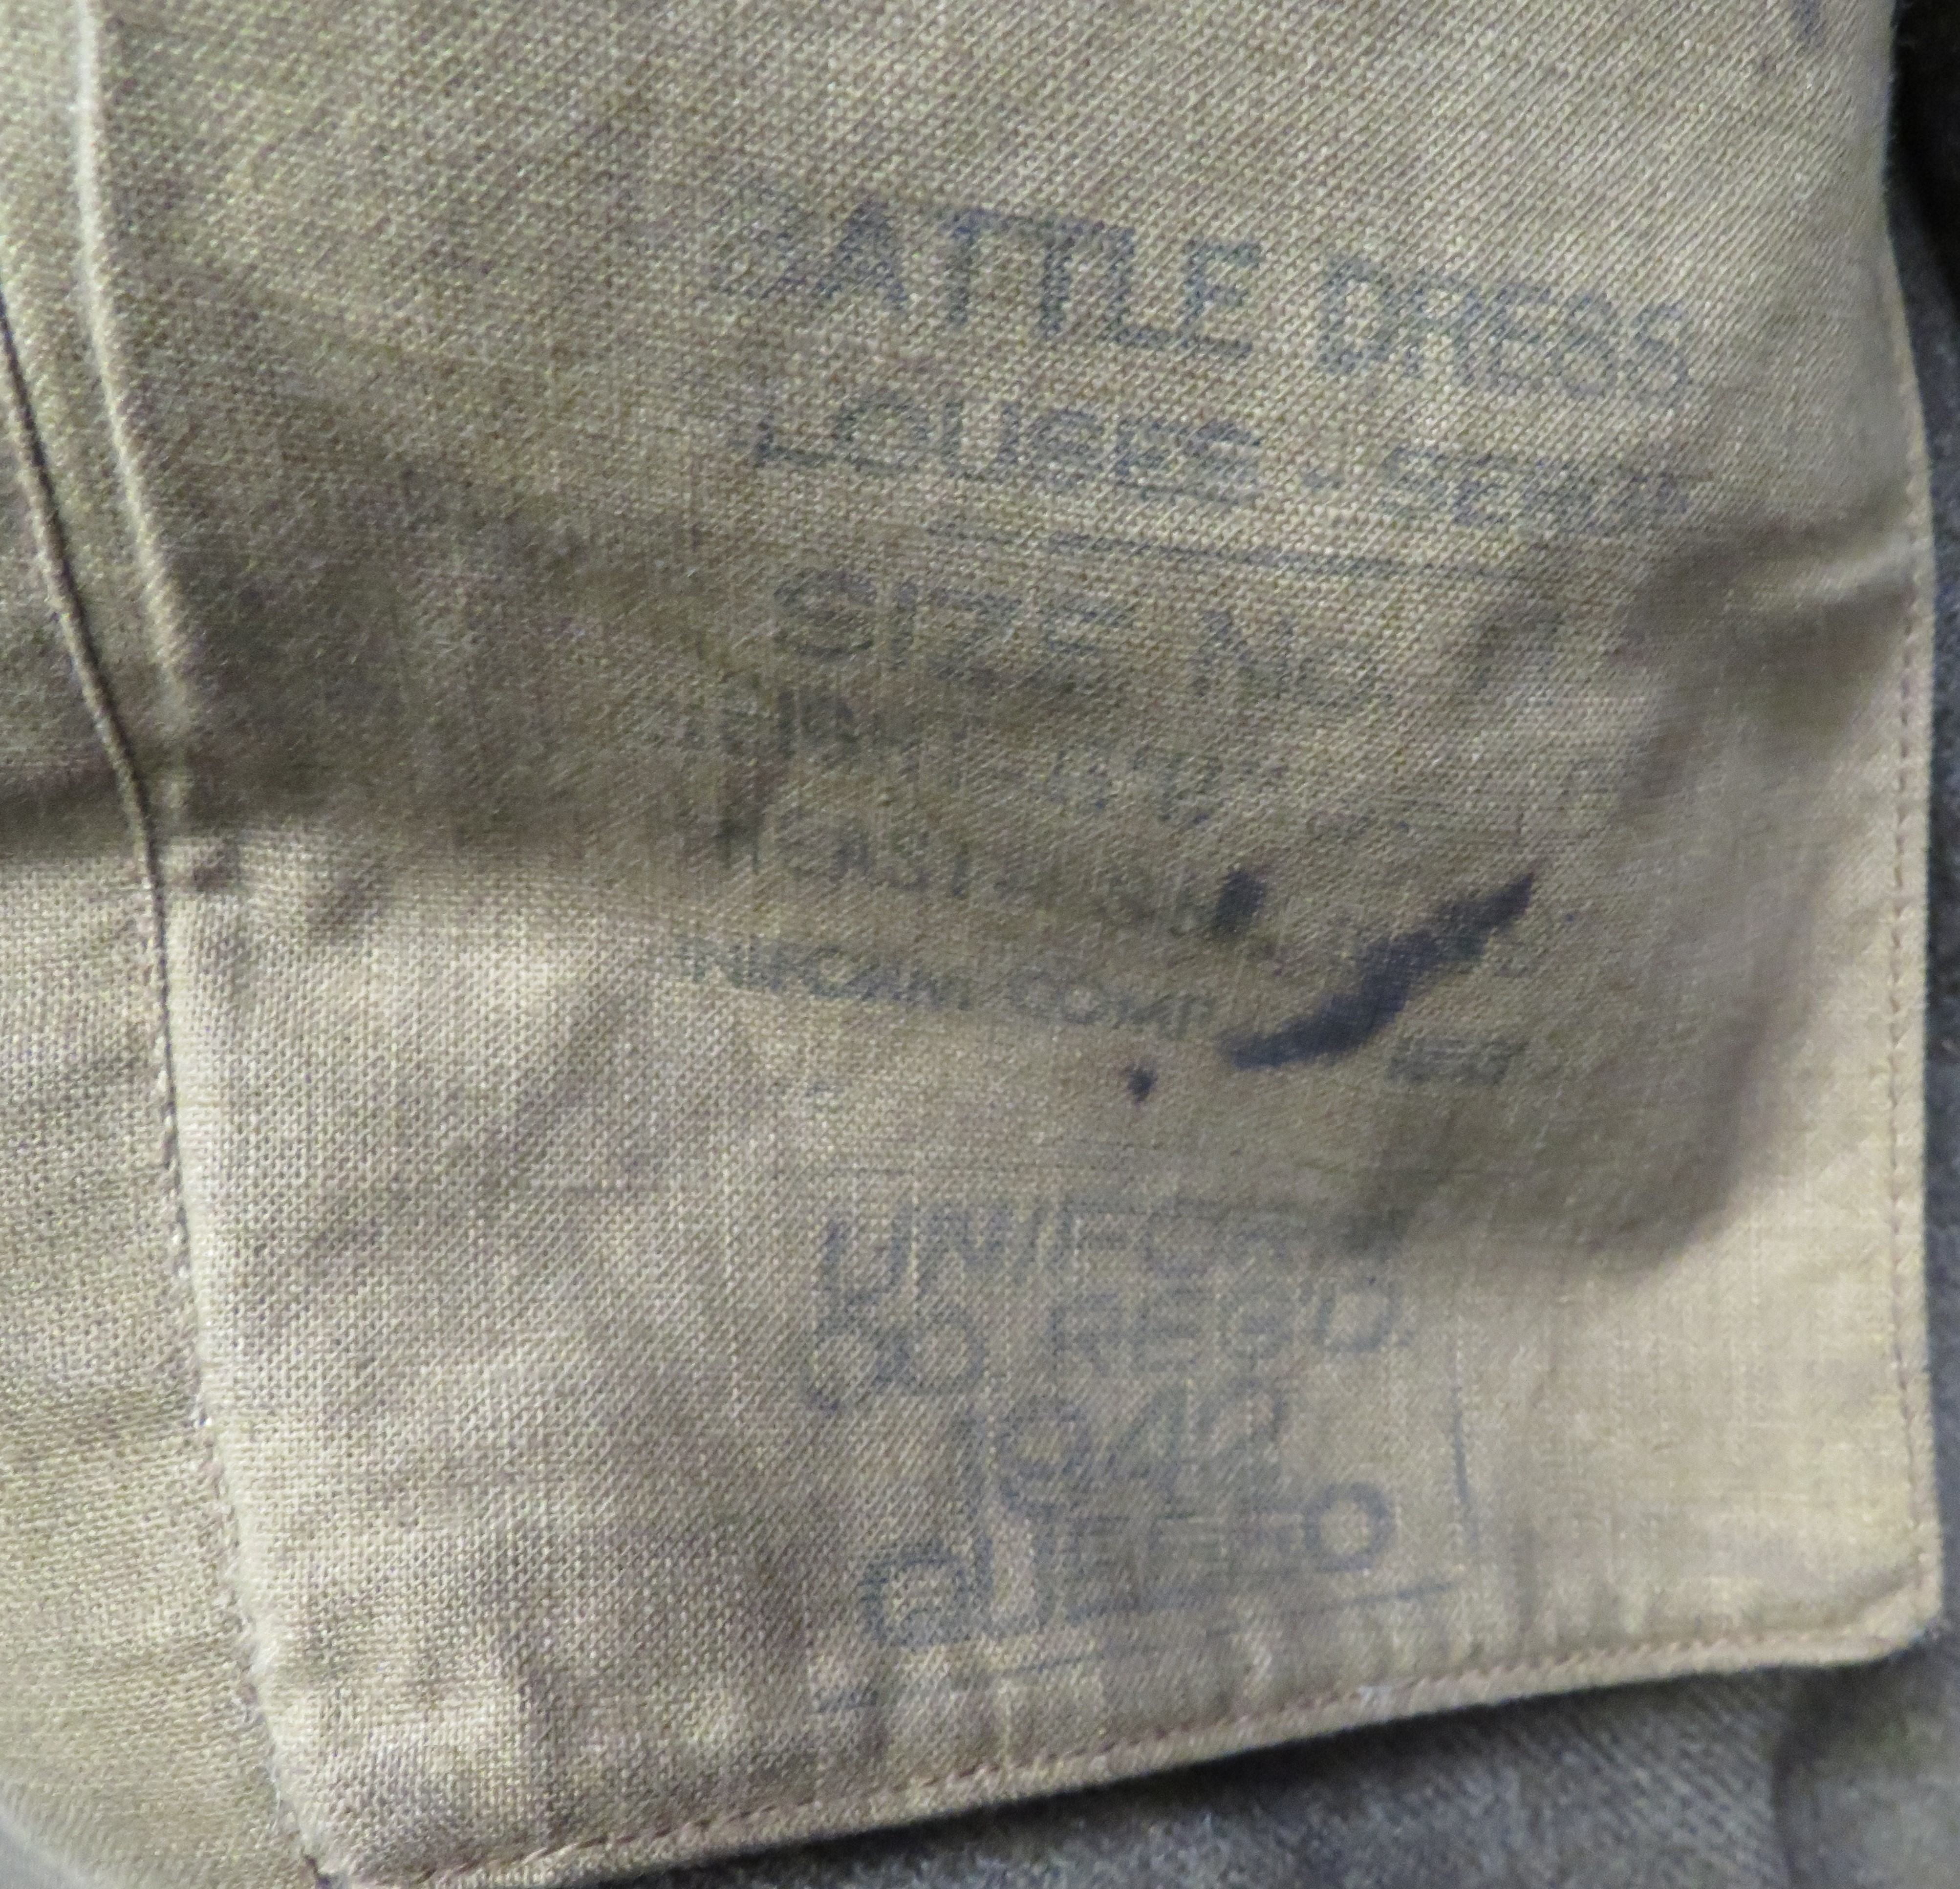 WW2 Royal Engineers Eastern Command Commonwealth Battledress Jacket khaki green, open collar - Image 3 of 3